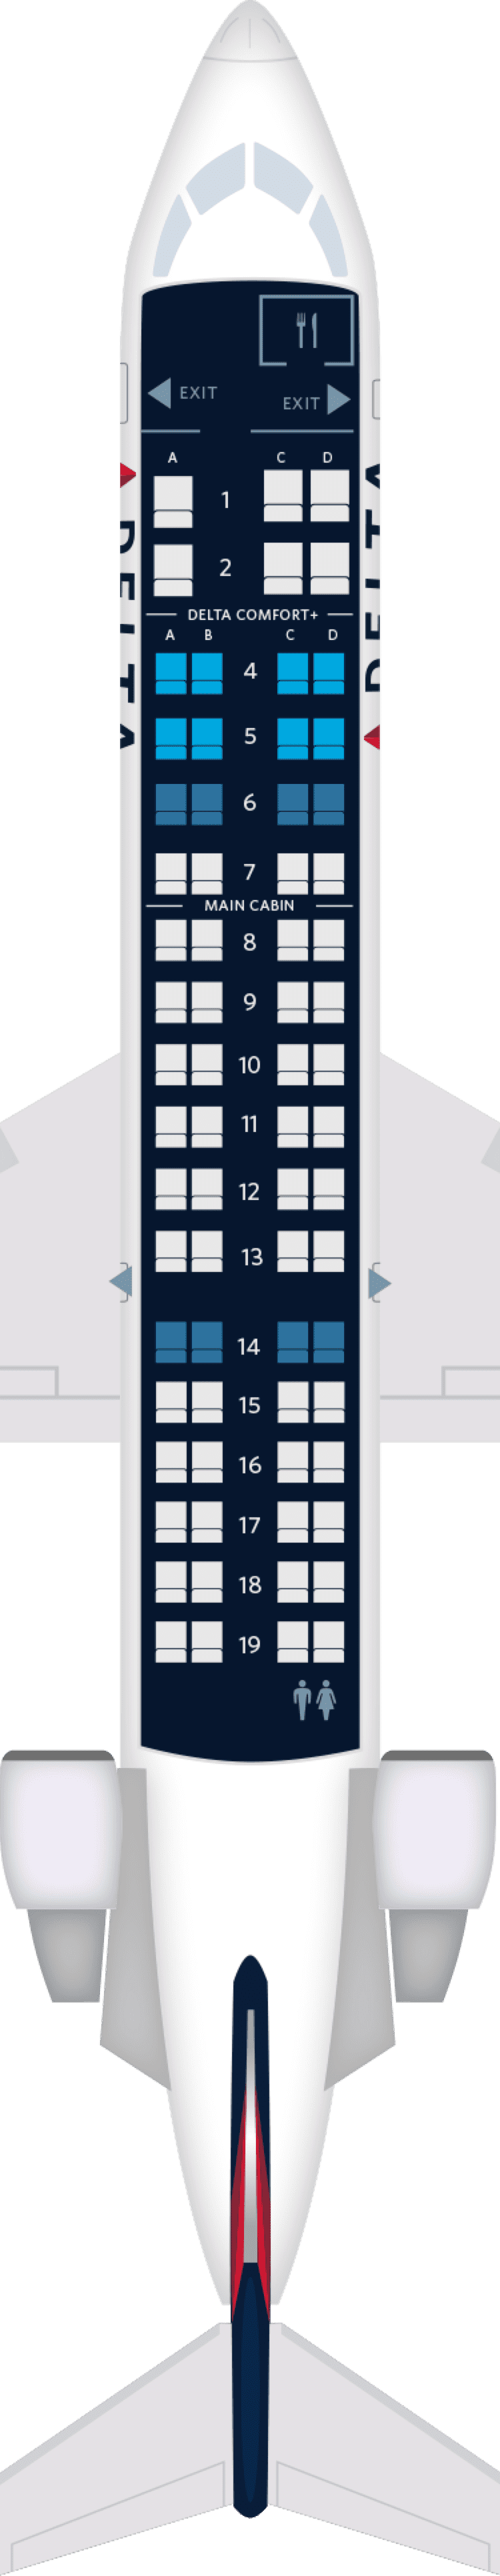 Bombardier CRJ-700 Aircraft Seat Maps, Specs & Amenities : Delta Air Lines